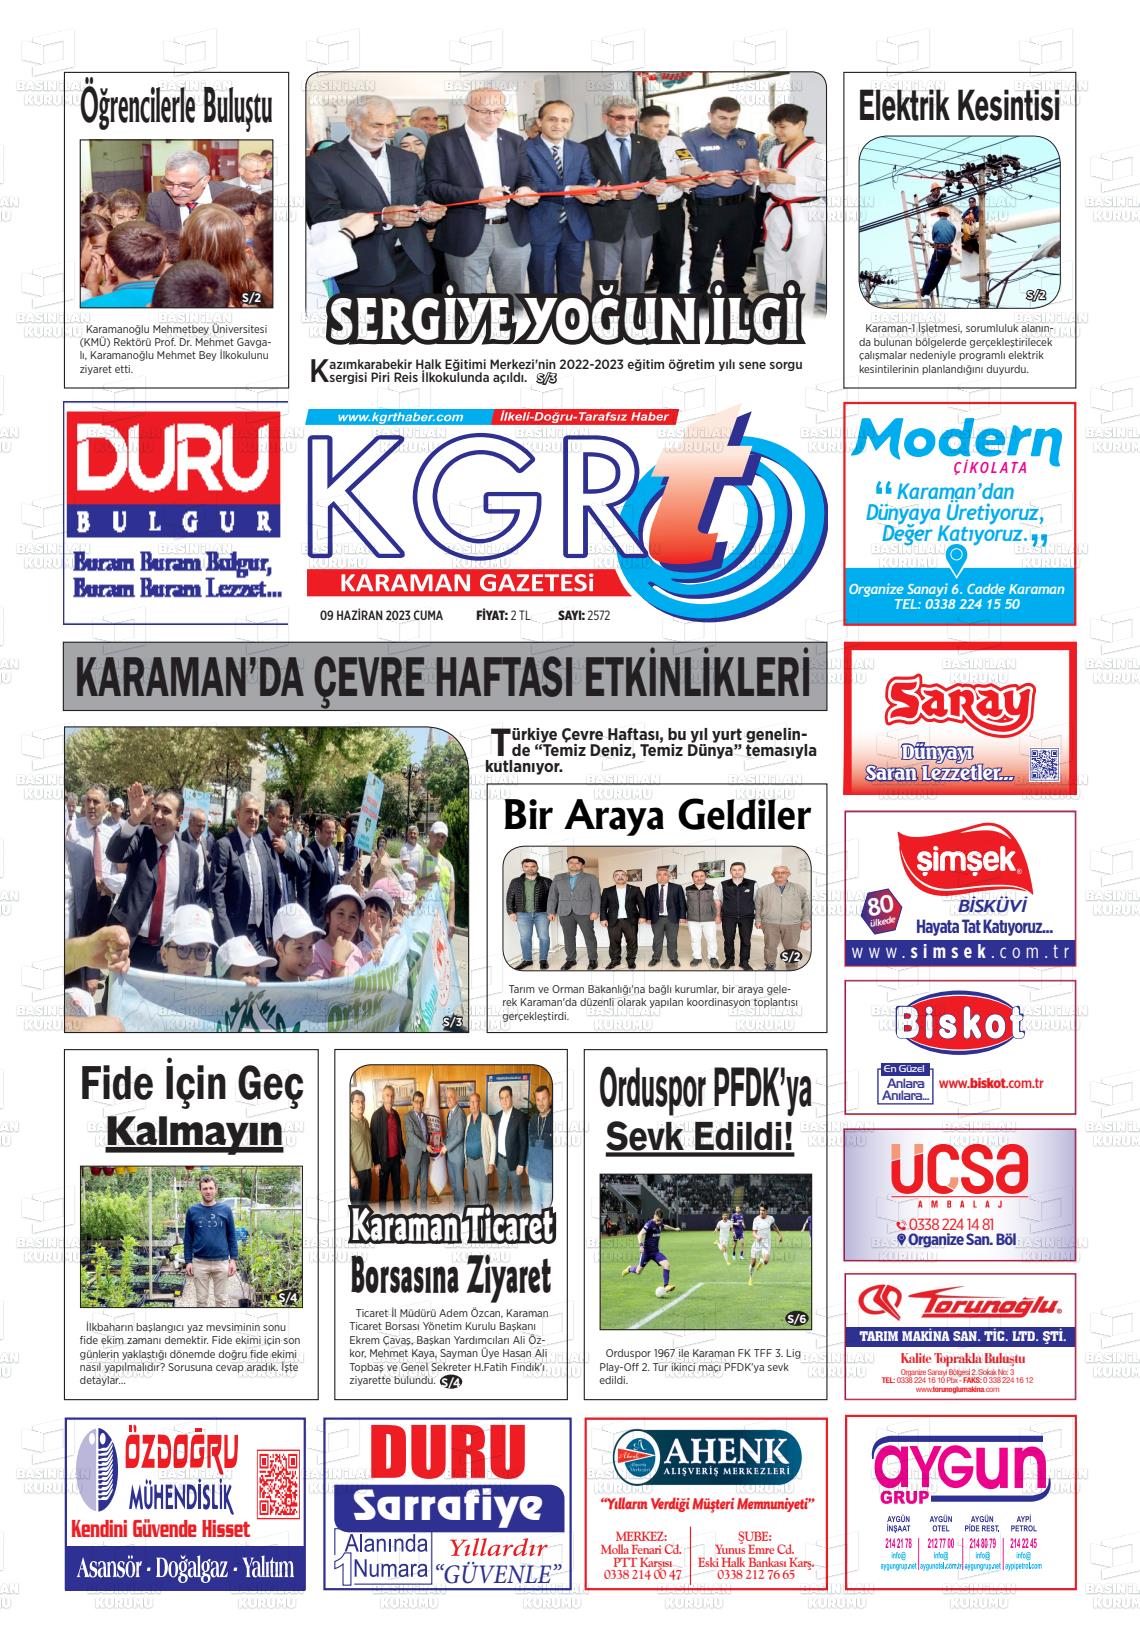 10 Haziran 2023 Kgrt Karaman Gazete Manşeti